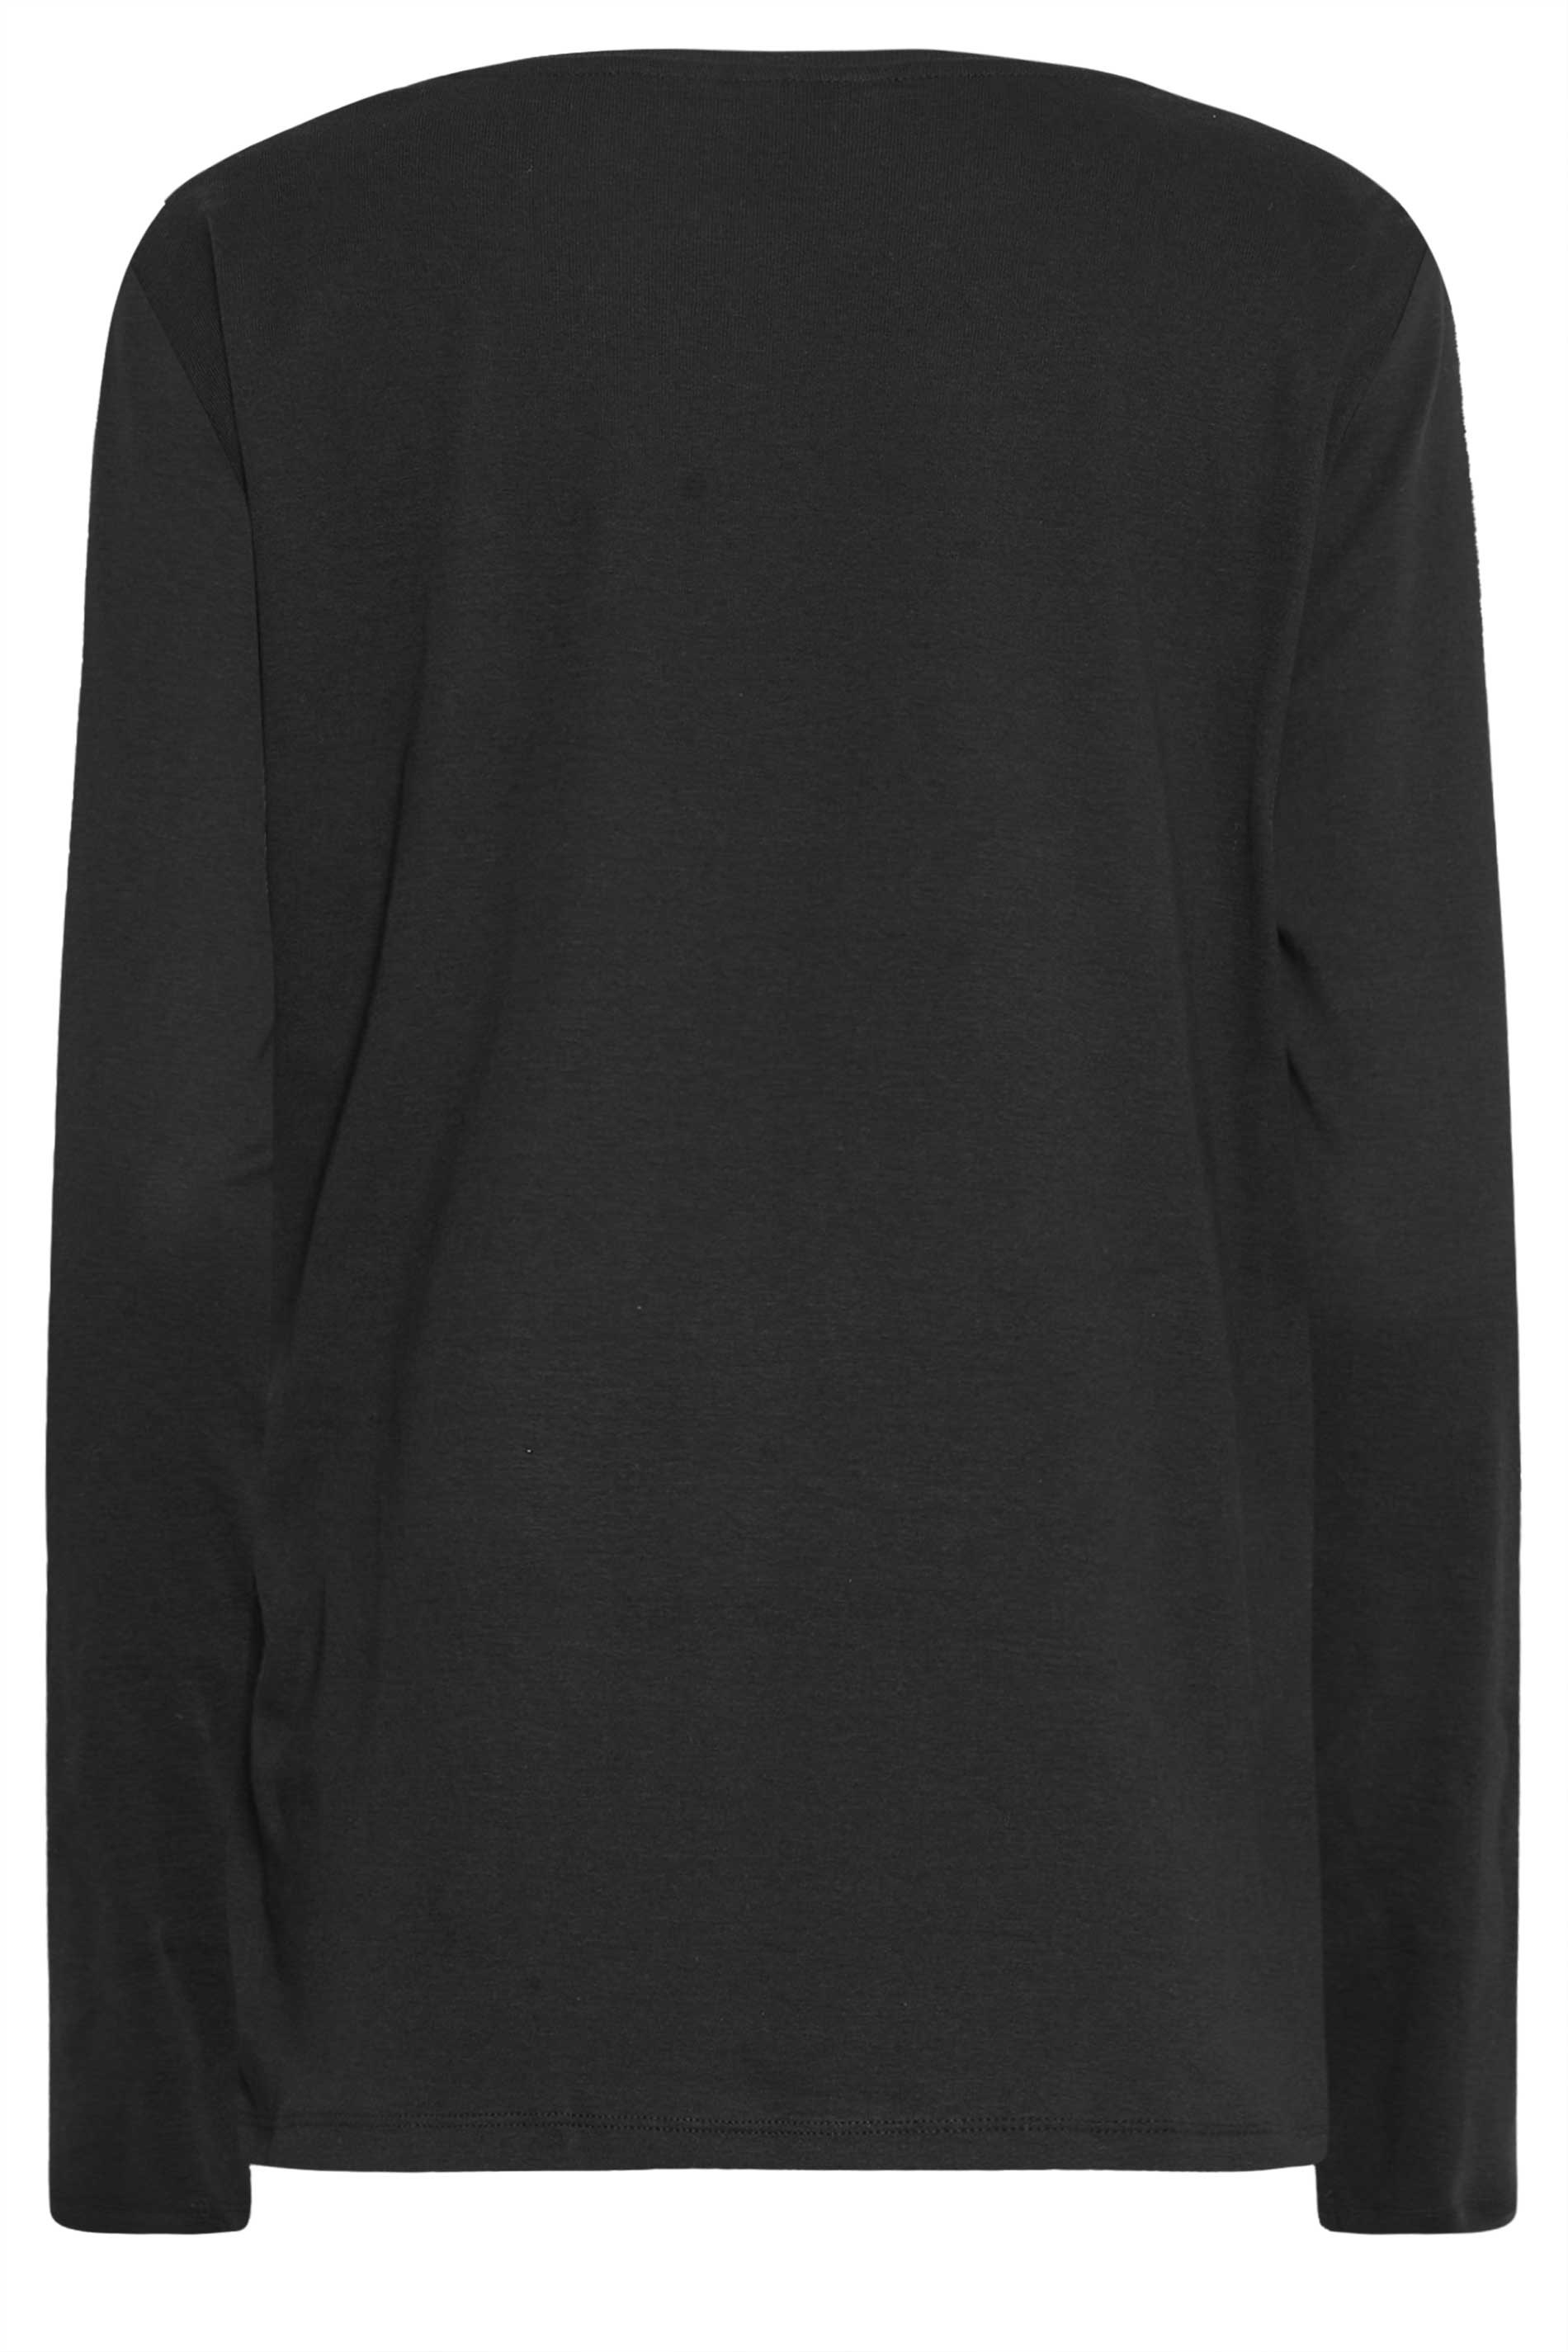 LTS Tall Women's 2 Pack Black & White Lace T-Shirt Bras